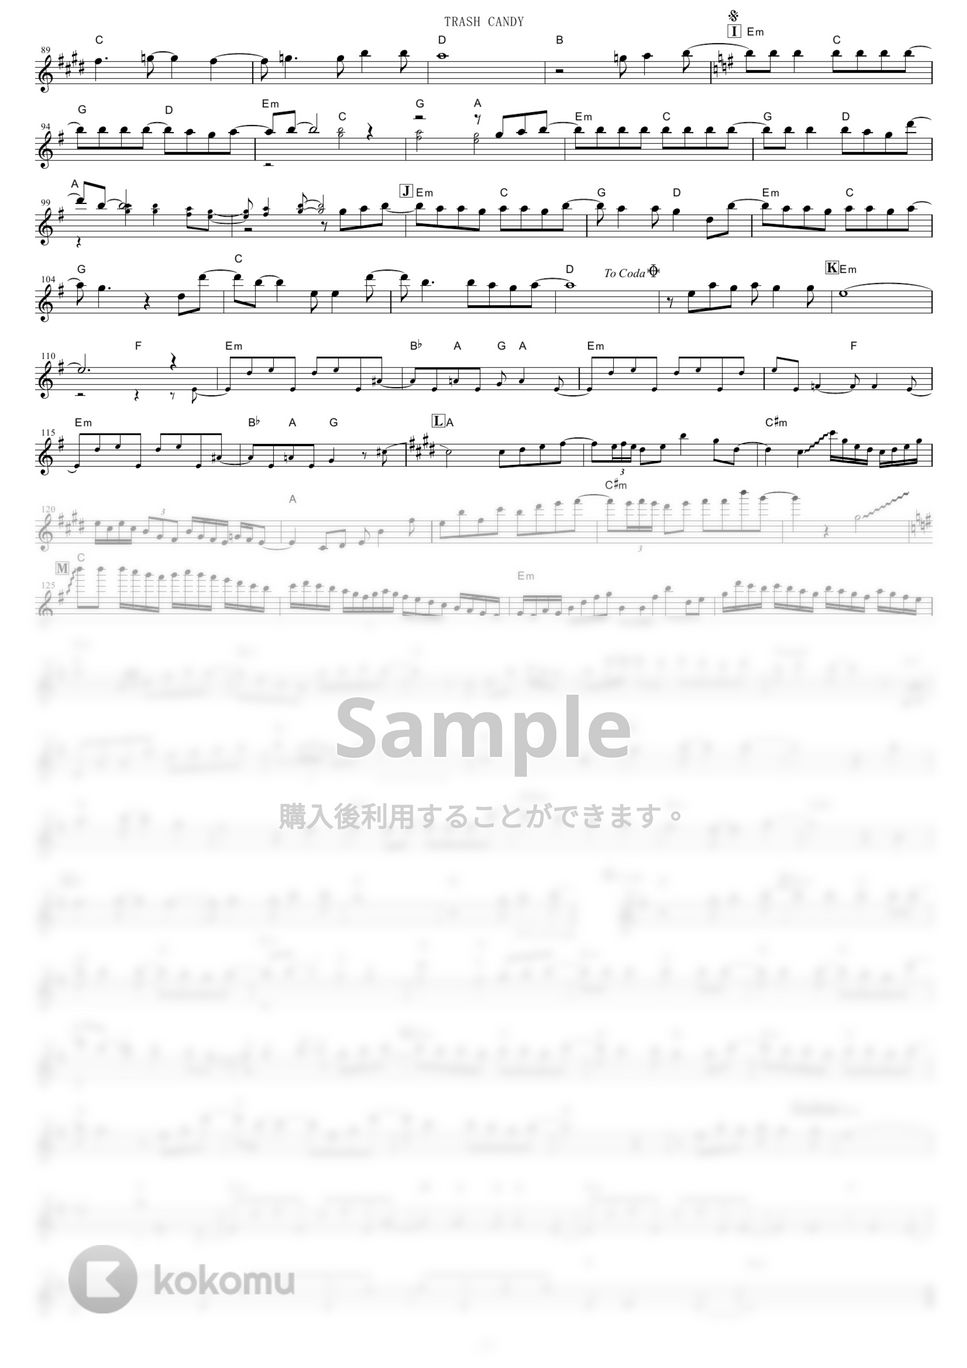 GRANRODEO - TRASH CANDY (『文豪ストレイドッグス』 / in Bb) by muta-sax